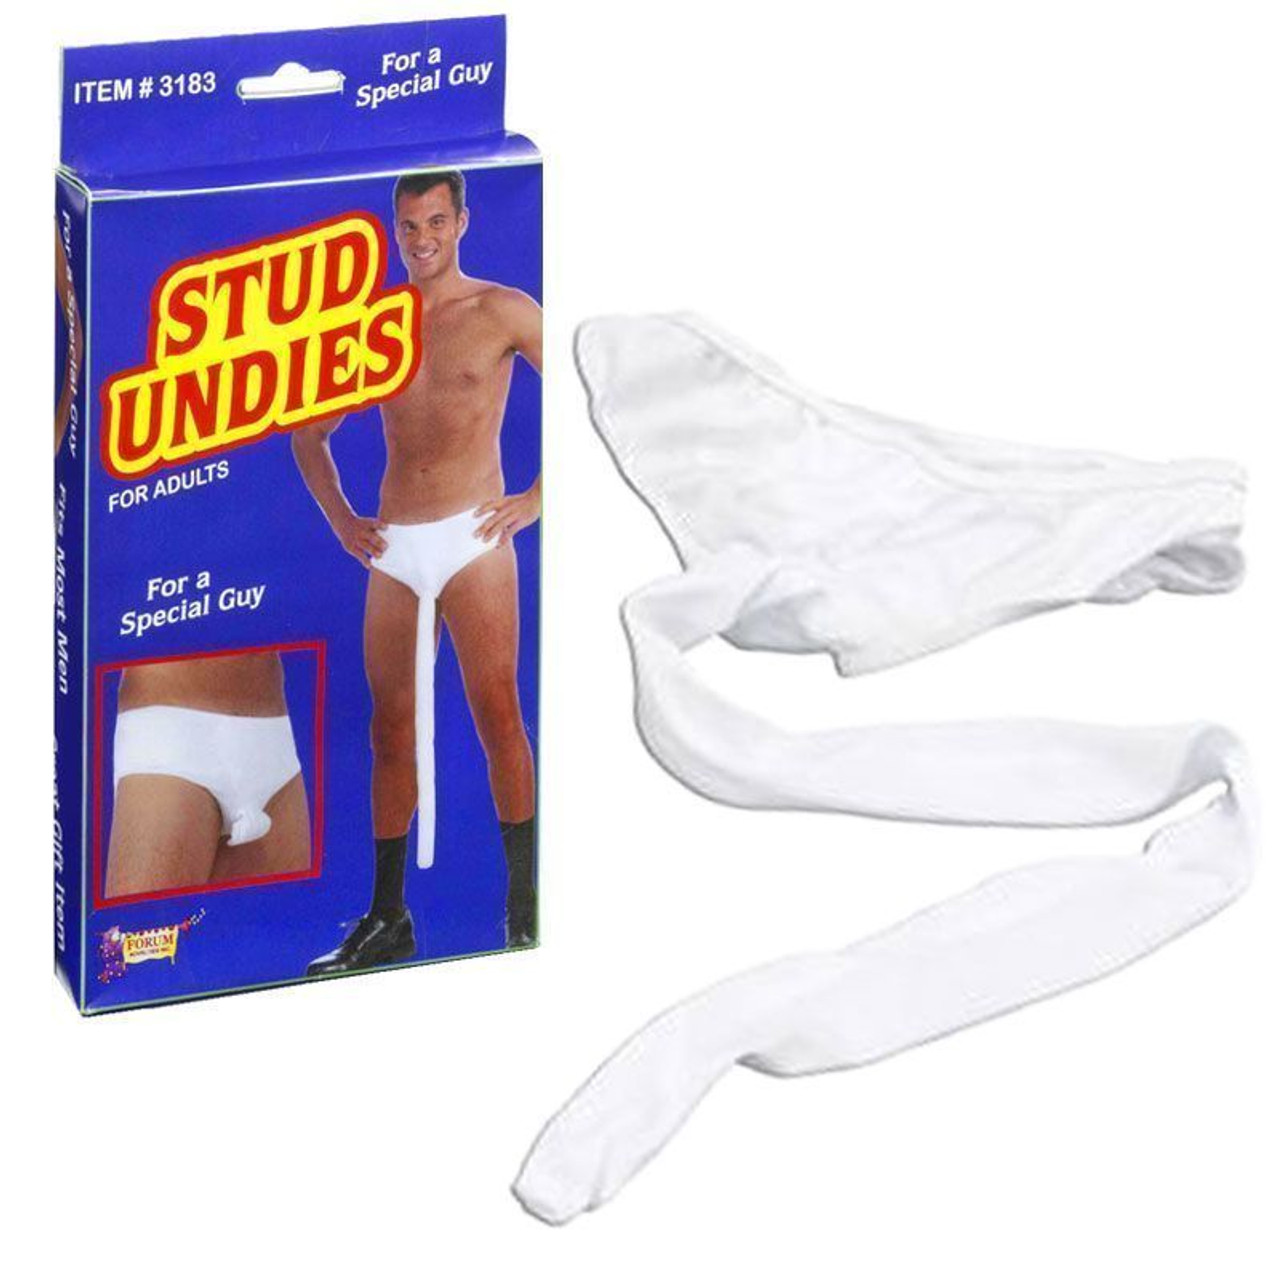 Undies for 2 - Fundies Underwear Bachelor Party - QTY DISCOUNTS